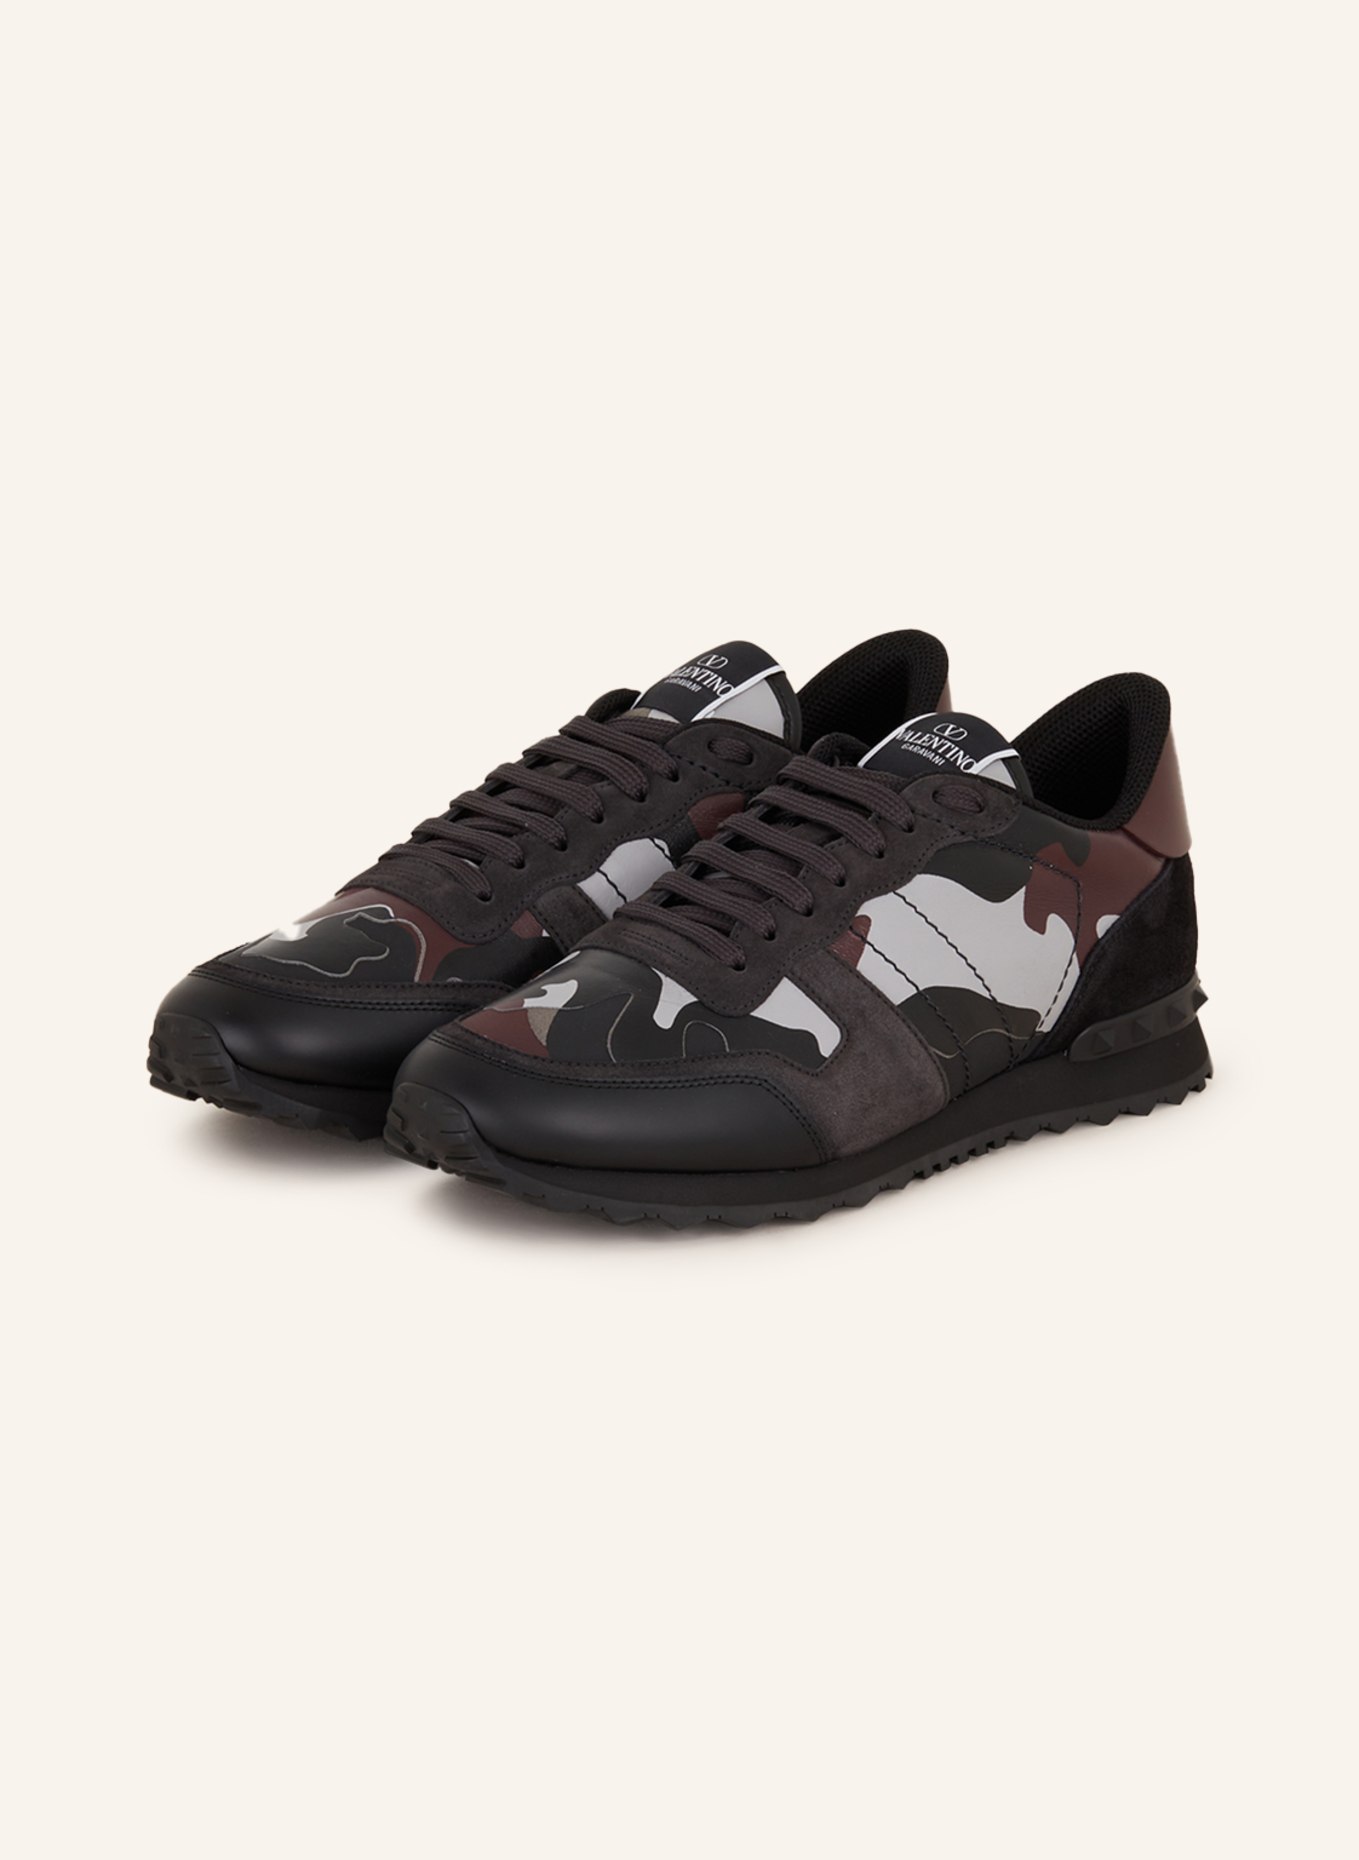 VALENTINO Sneakers ROCKRUNNER in dark gray/ dark red/ light